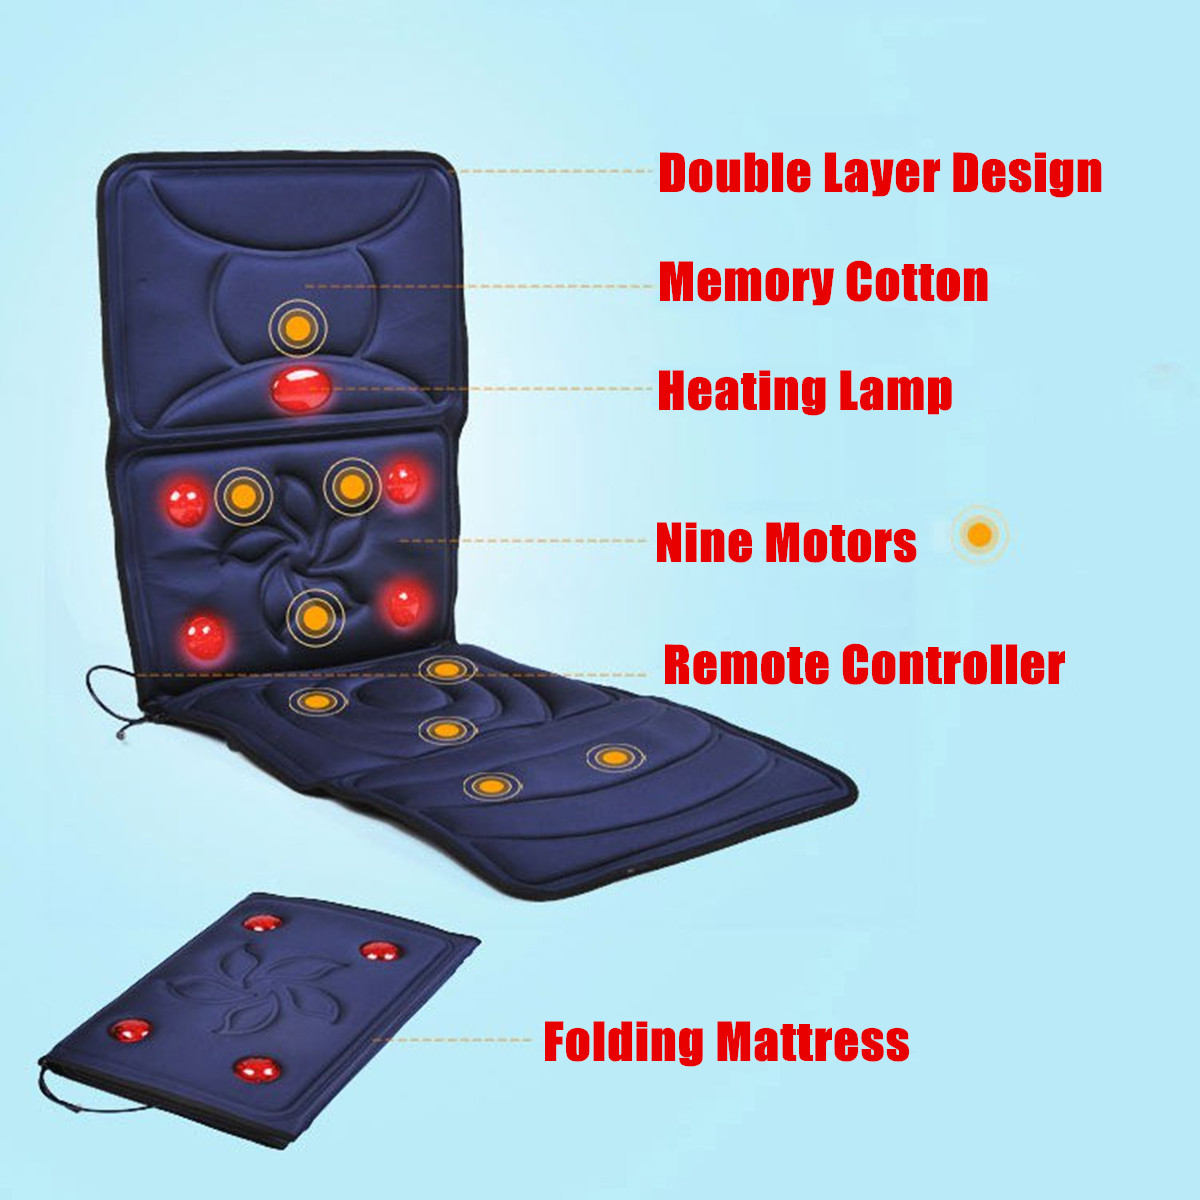 Infrared-Heating-Full-Body-Massage-Cushion-Heated-Therapy-Back-Massage-Chair-Cushion-Full-Body-Renmo-1938389-6